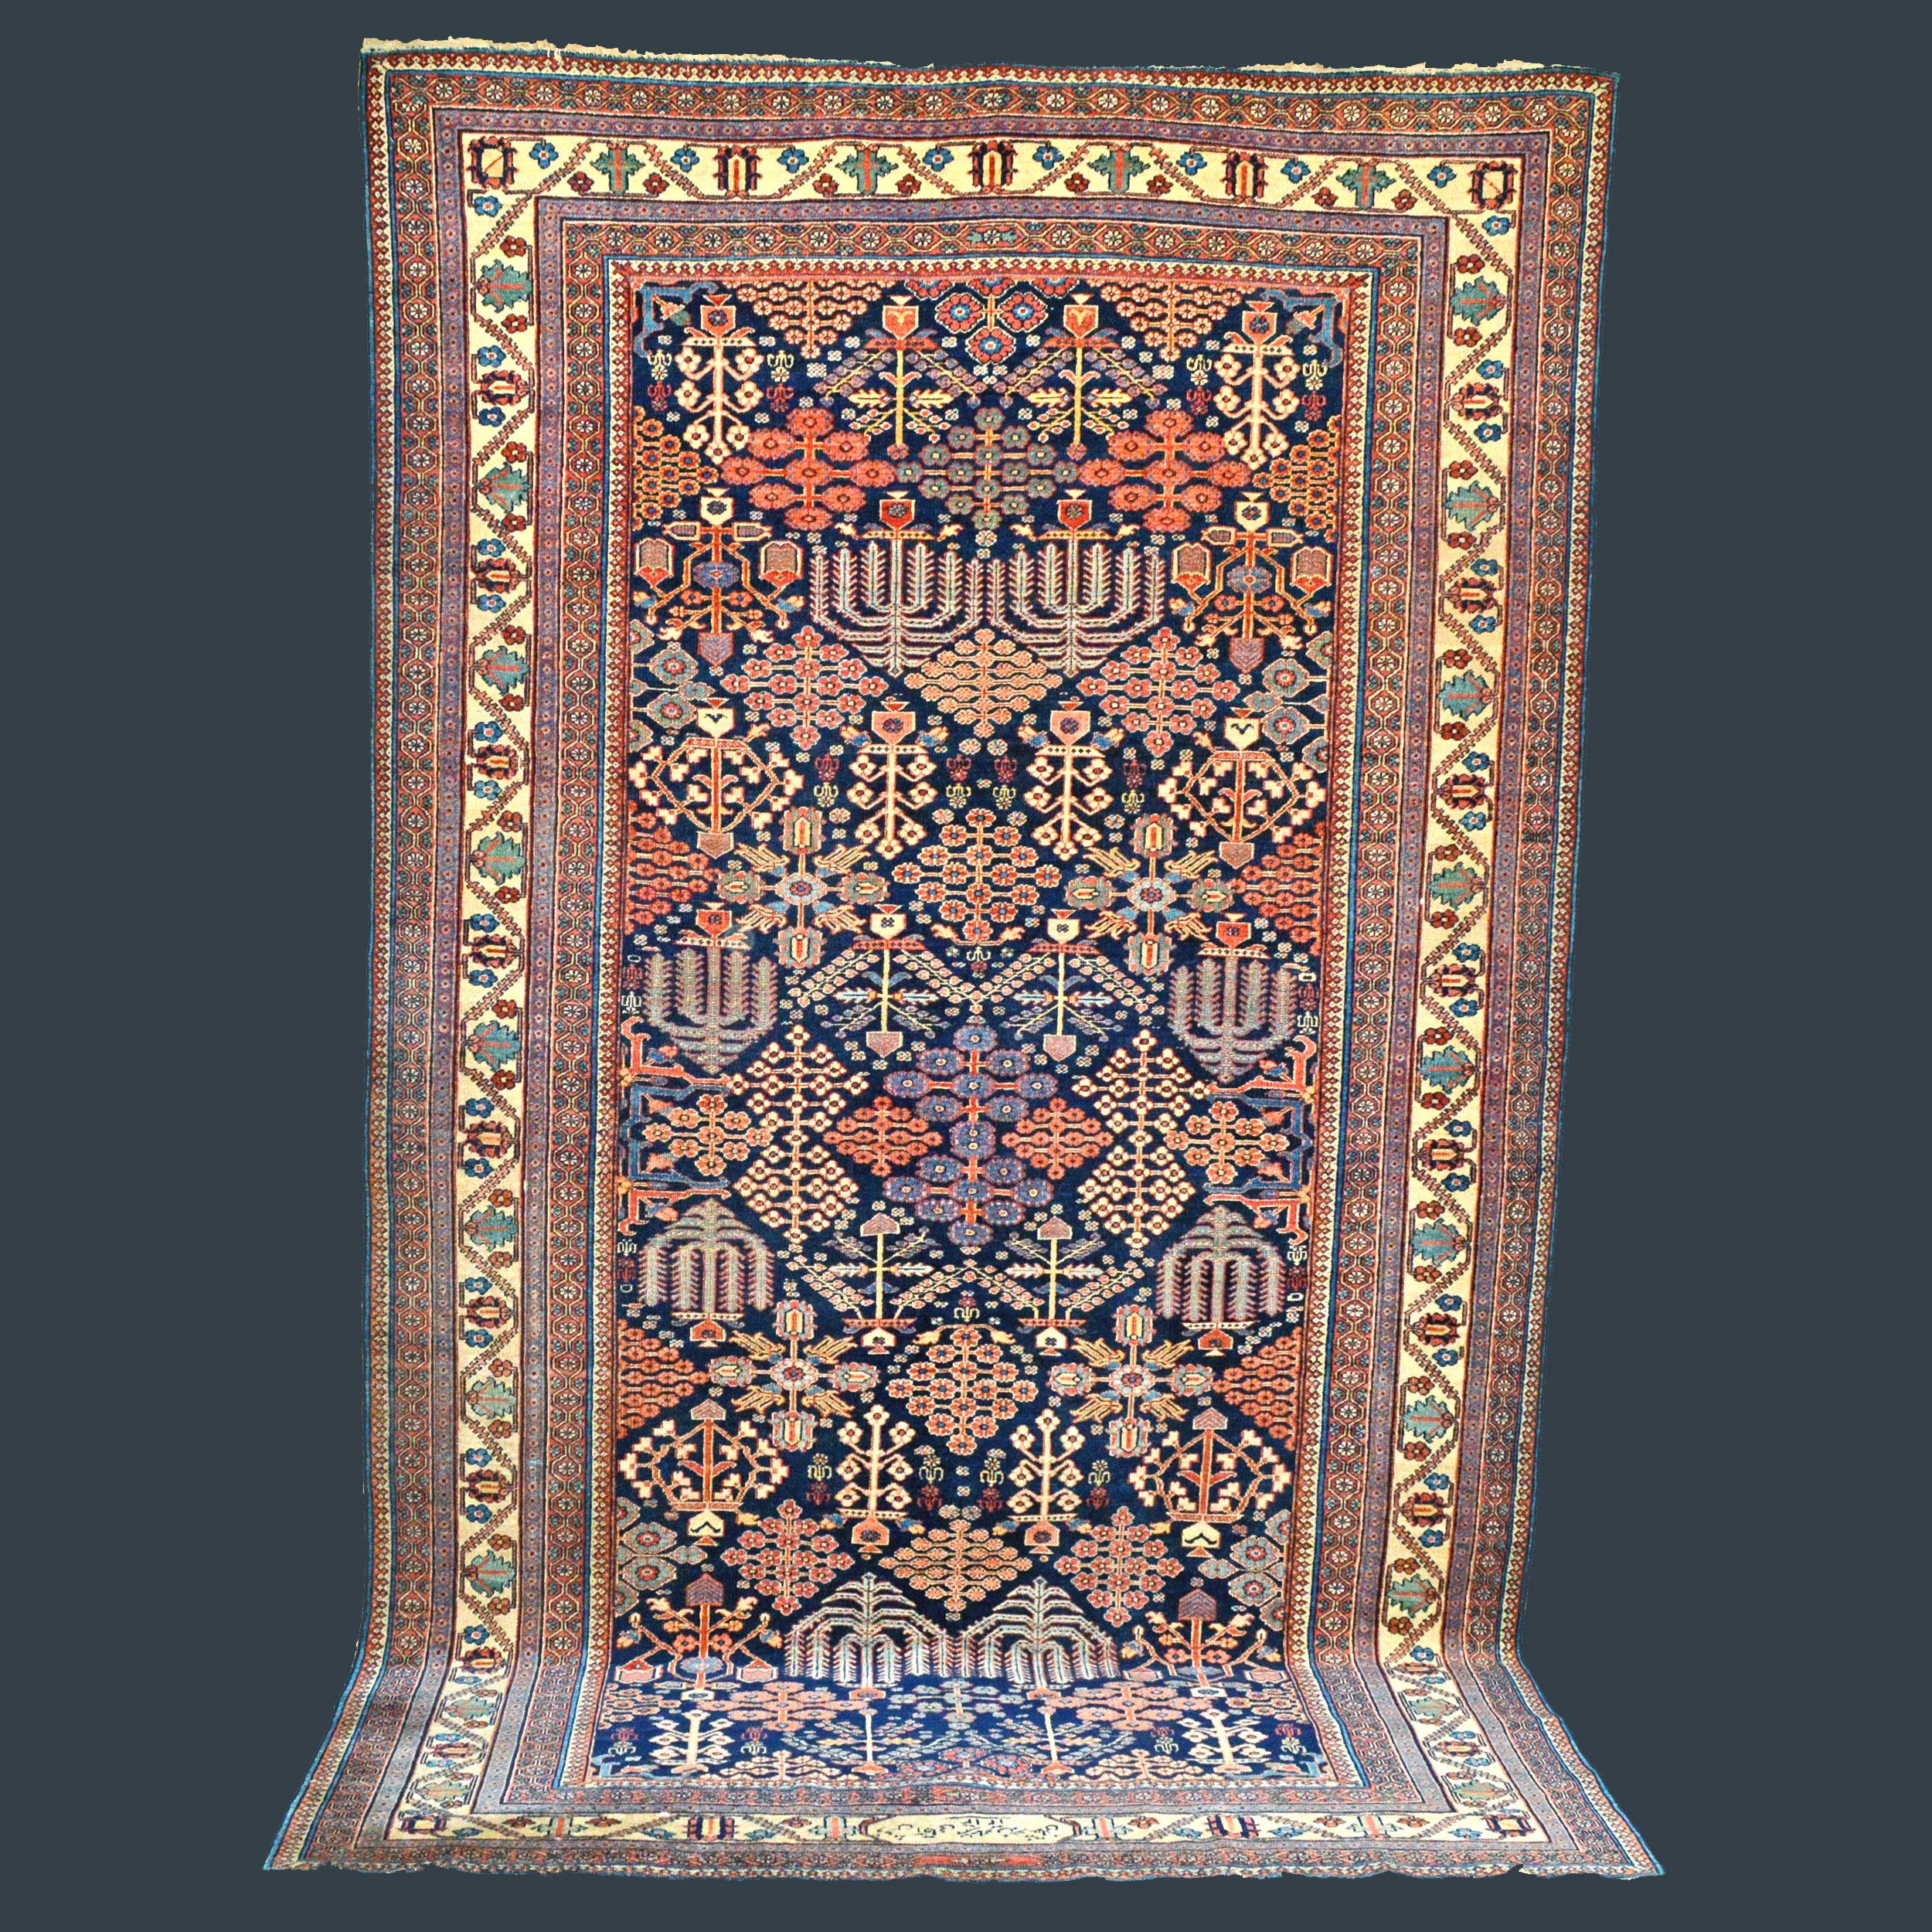 Antique Joshagan gallery carpet, central Persia, mid 19th century - Douglas Stock Gallery antique Oriental rug archives